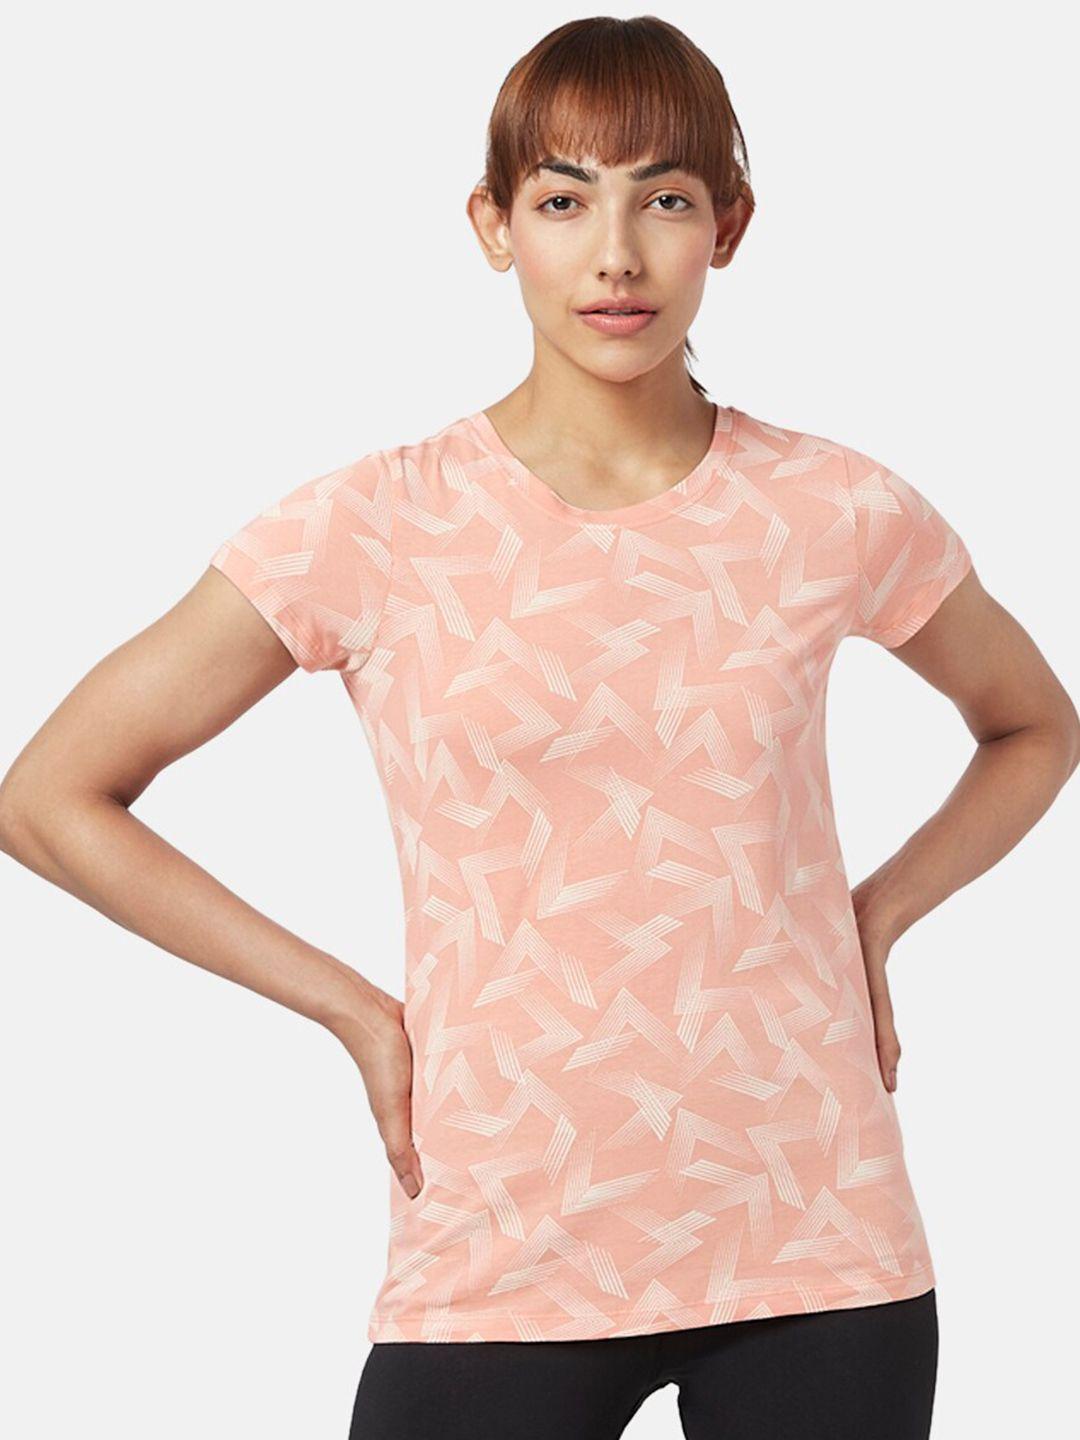 ajile by pantaloons women geometric printed cotton t-shirt